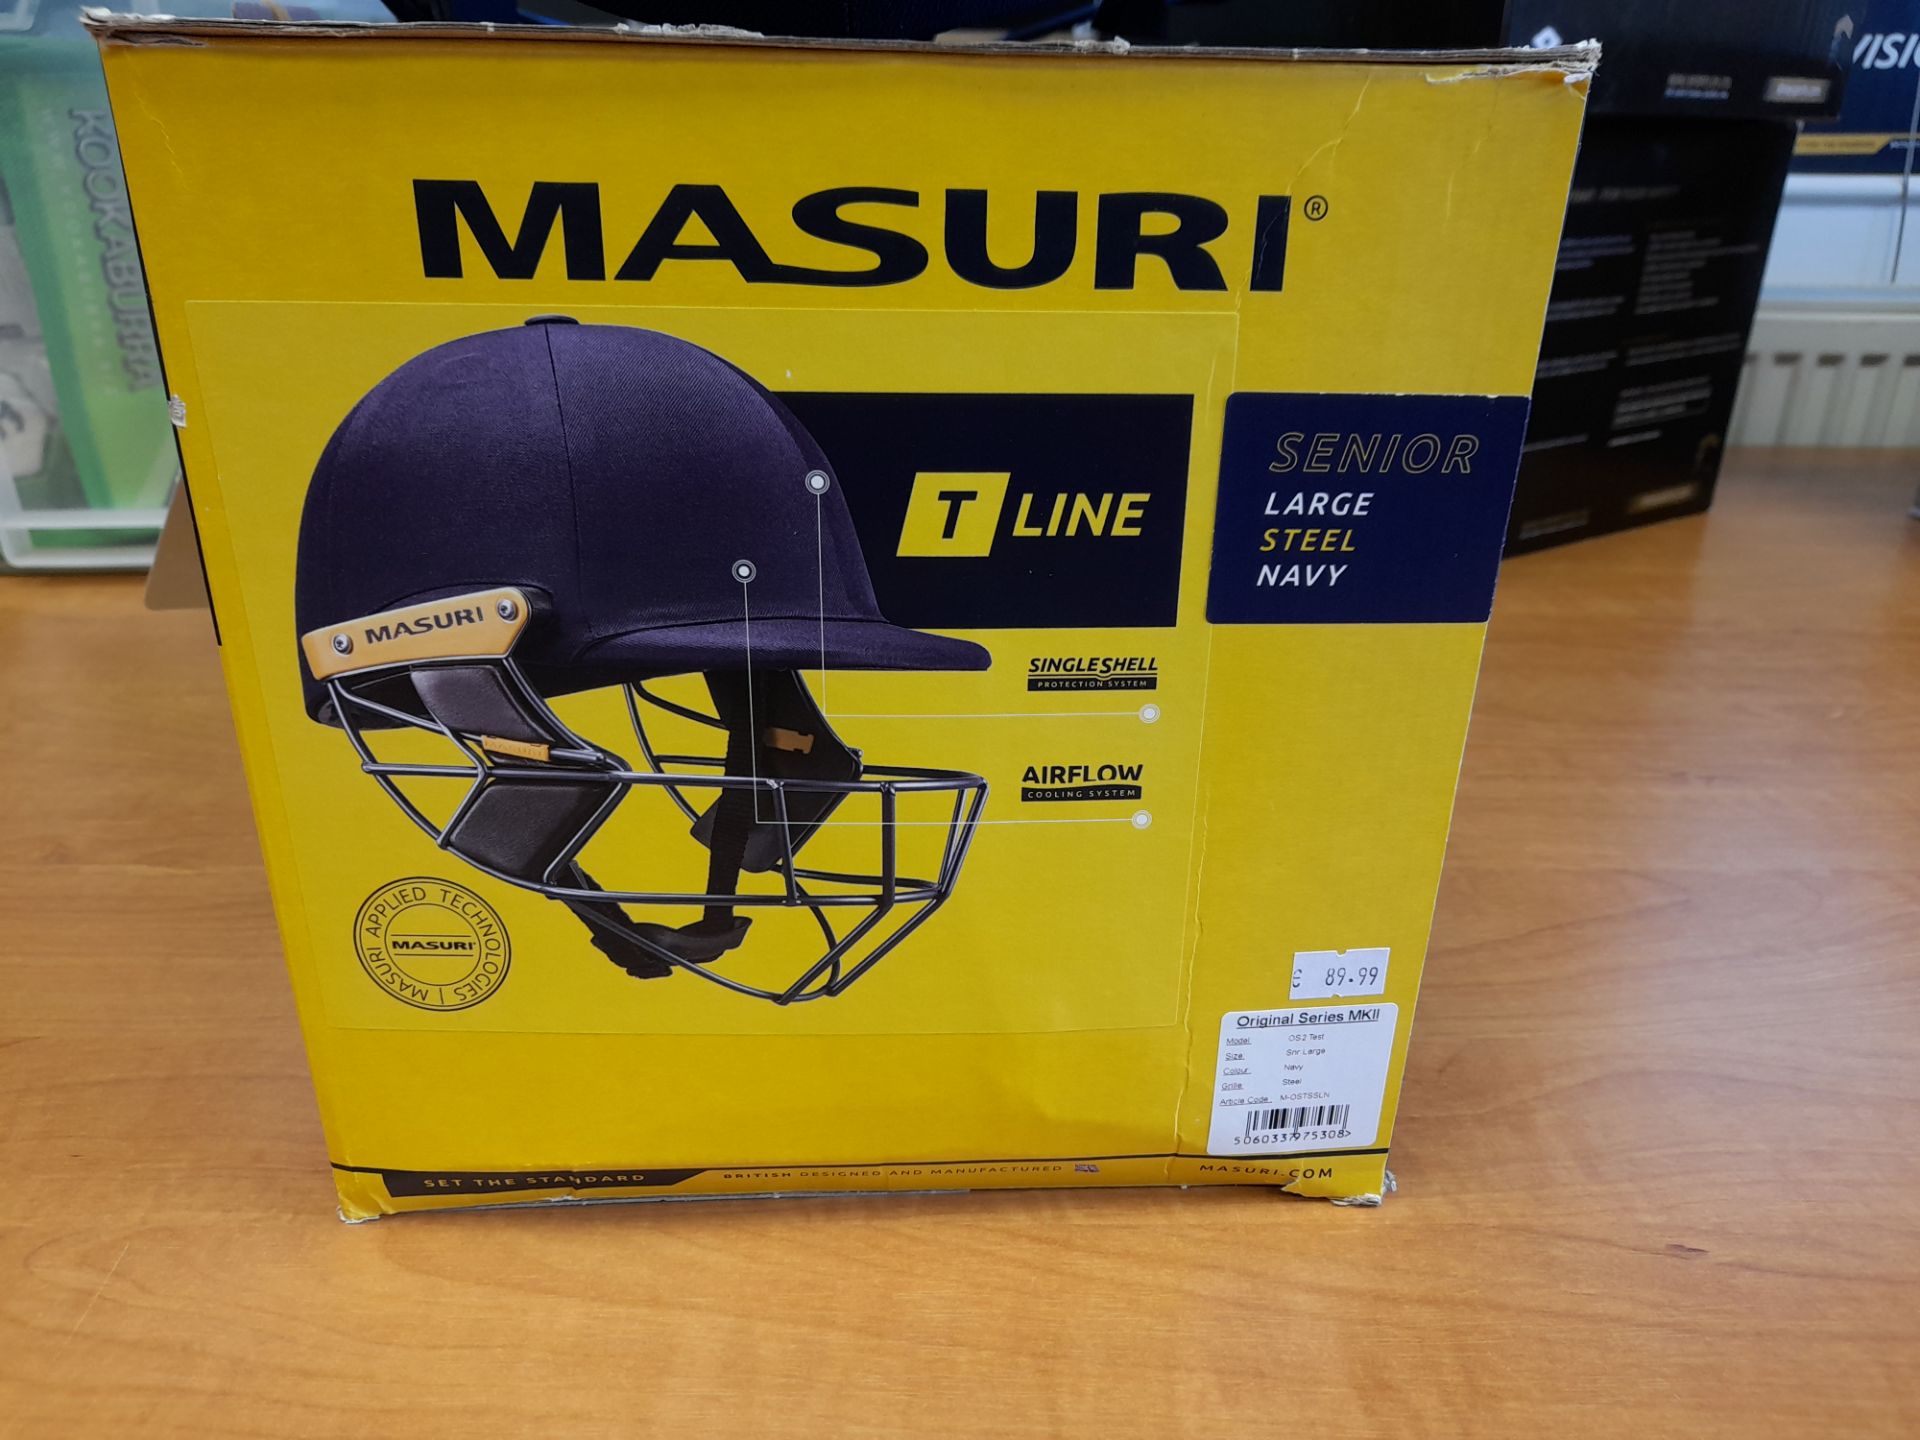 Masuri T Line Original Series MKII Test Helmet with Steel Grill, Size Senior Large, Box, Rrp. £89. - Image 3 of 4